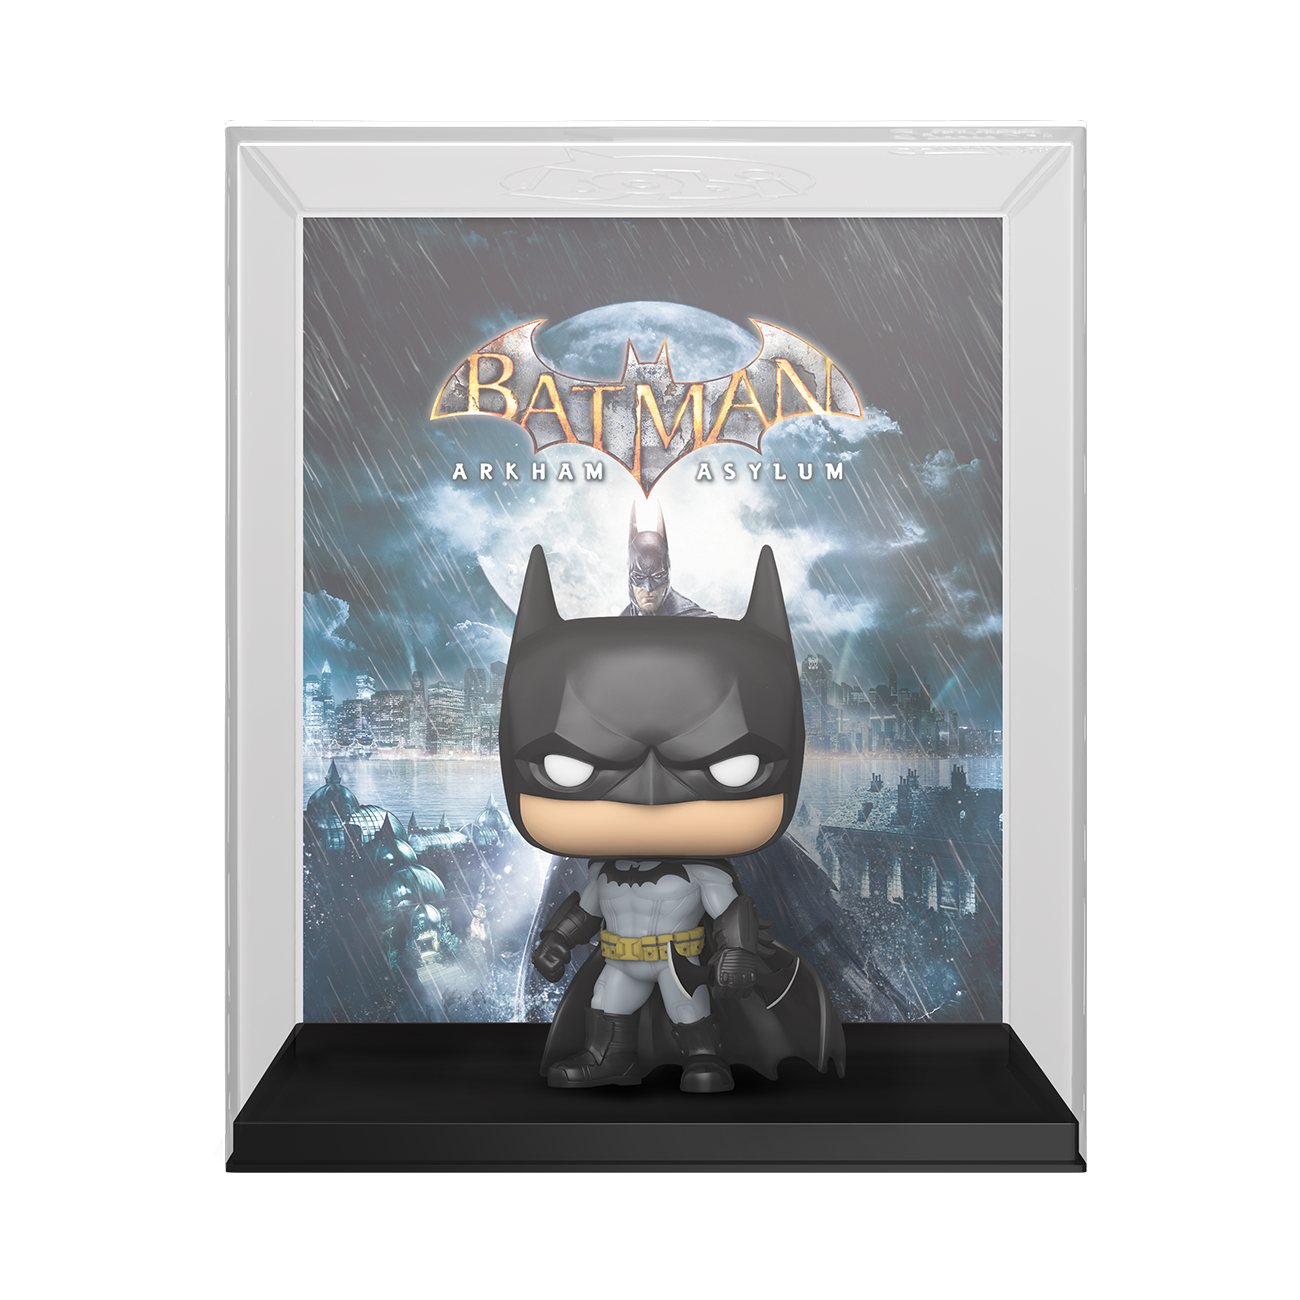 Batman: Arkham City Preview - Batman: Arkham City Cover Story - Game  Informer